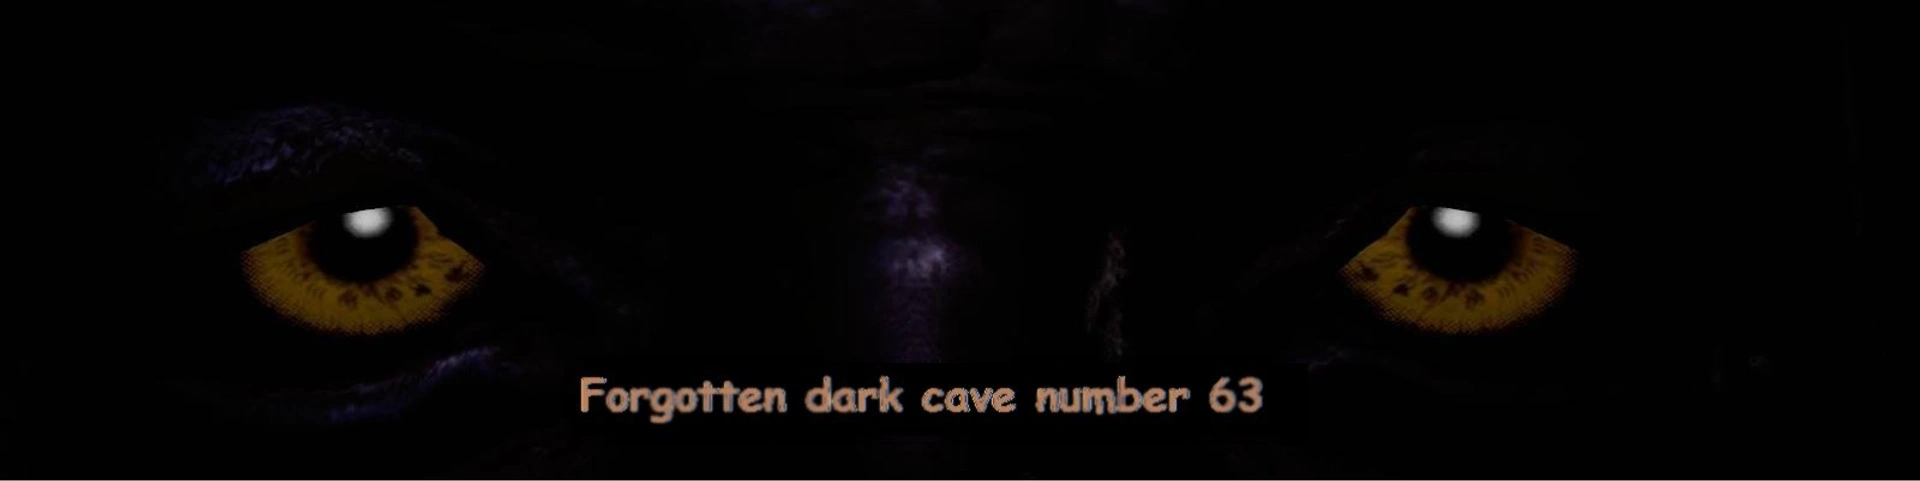 Forgotten Dark Cave Number 63 [v0.1] main image